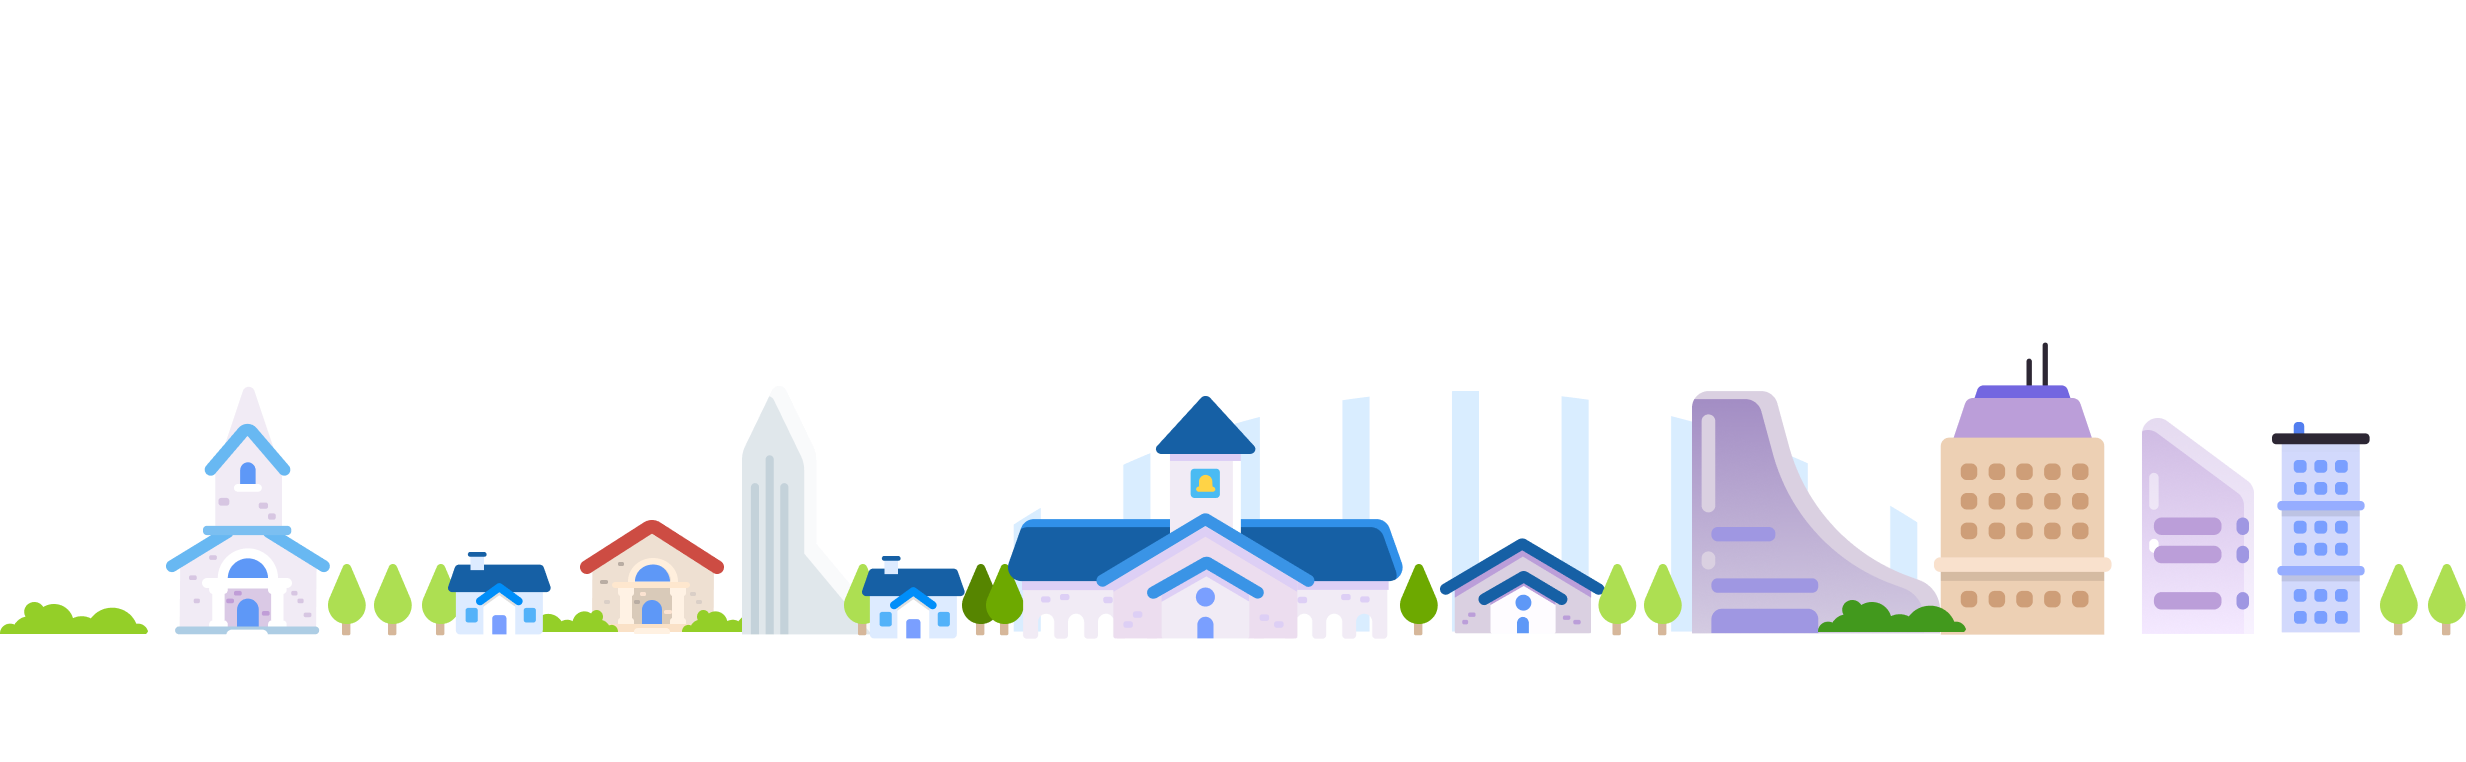 City buildings illustration